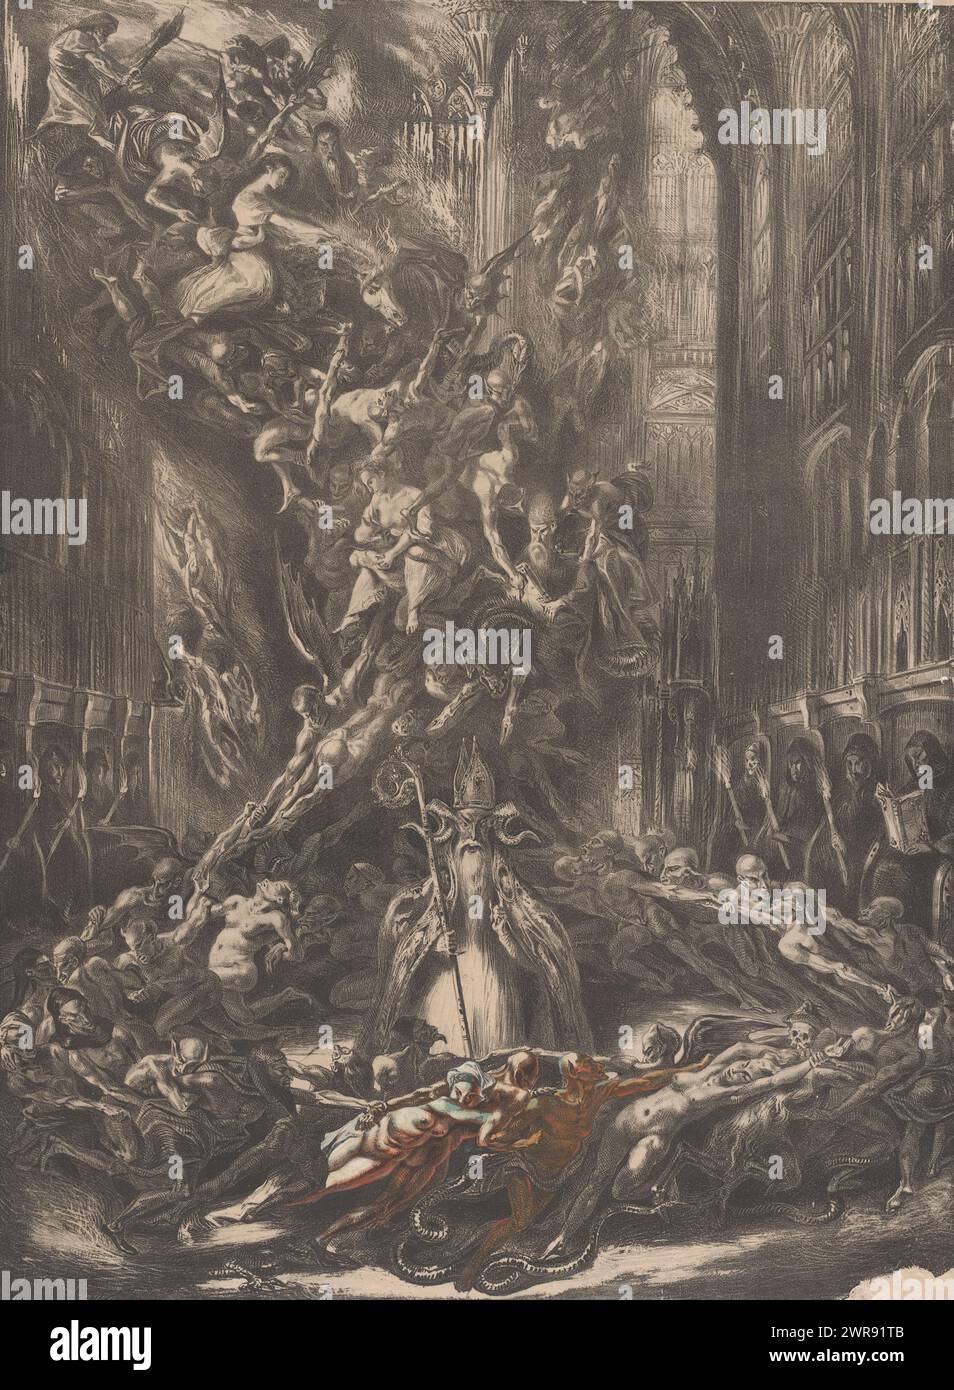 Satan with demons in a Gothic cathedral, La Ronde du Sabbat, print maker: Louis Boulanger, publisher: Schrott, Paris, 1829, paper, height 708 mm × width 523 mm, print Stock Photo